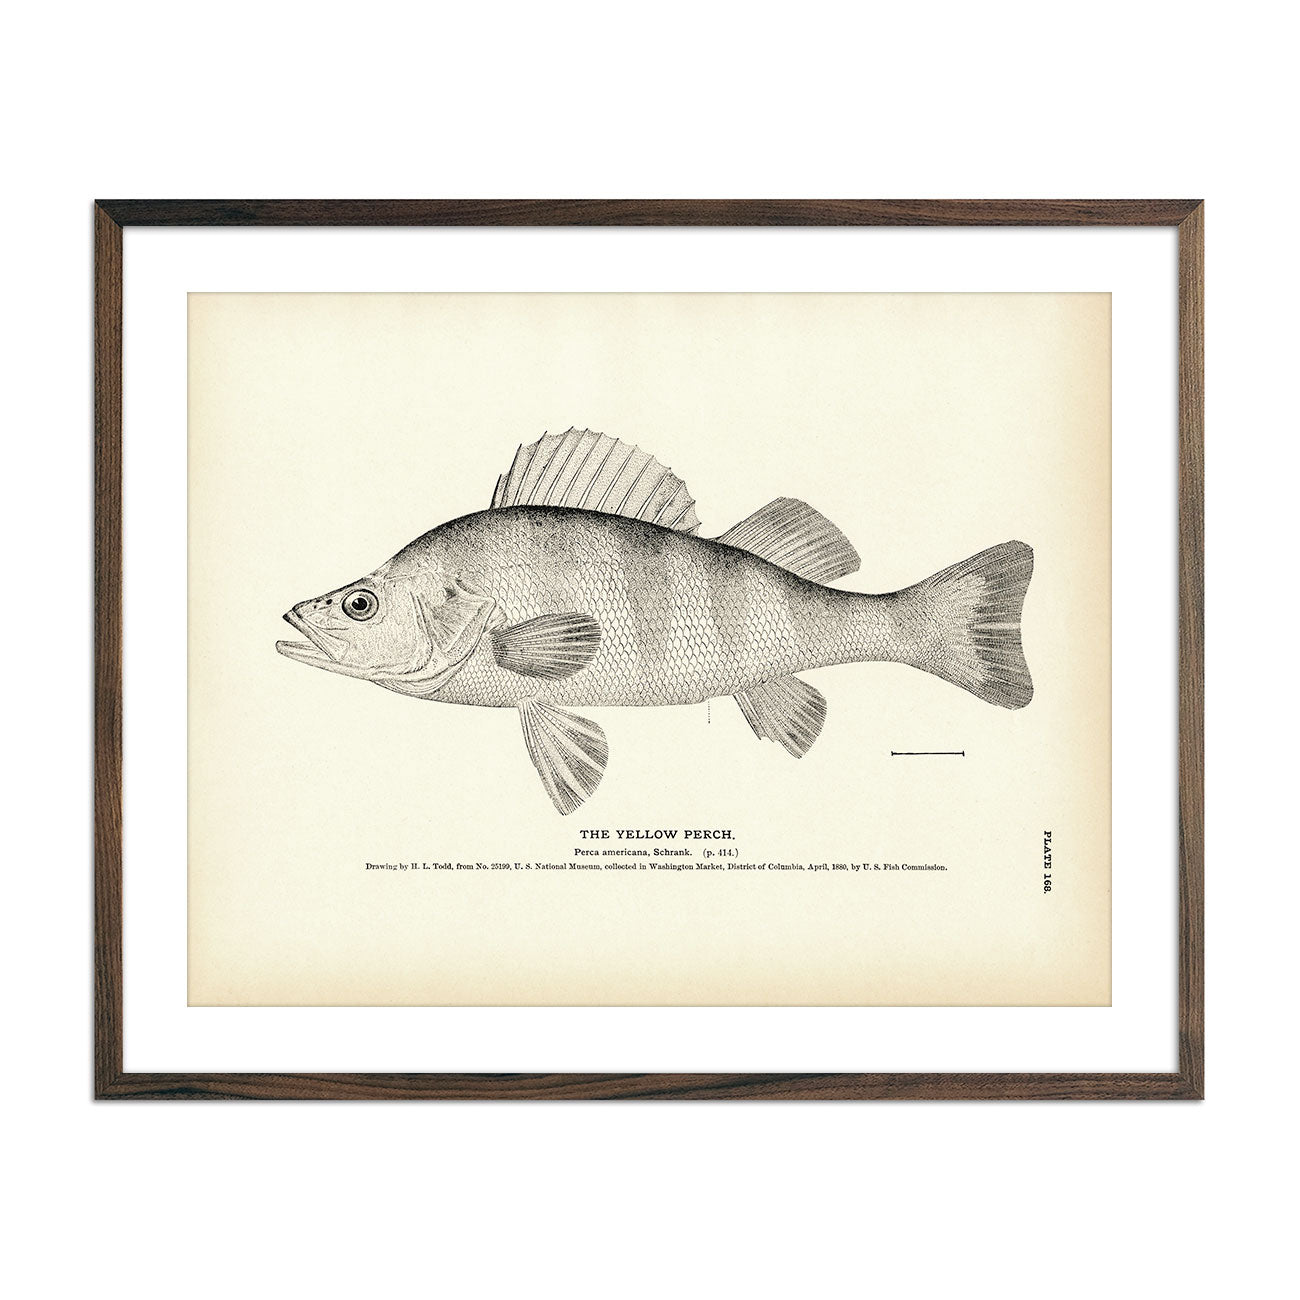 Vintage Yellow Perch fish print